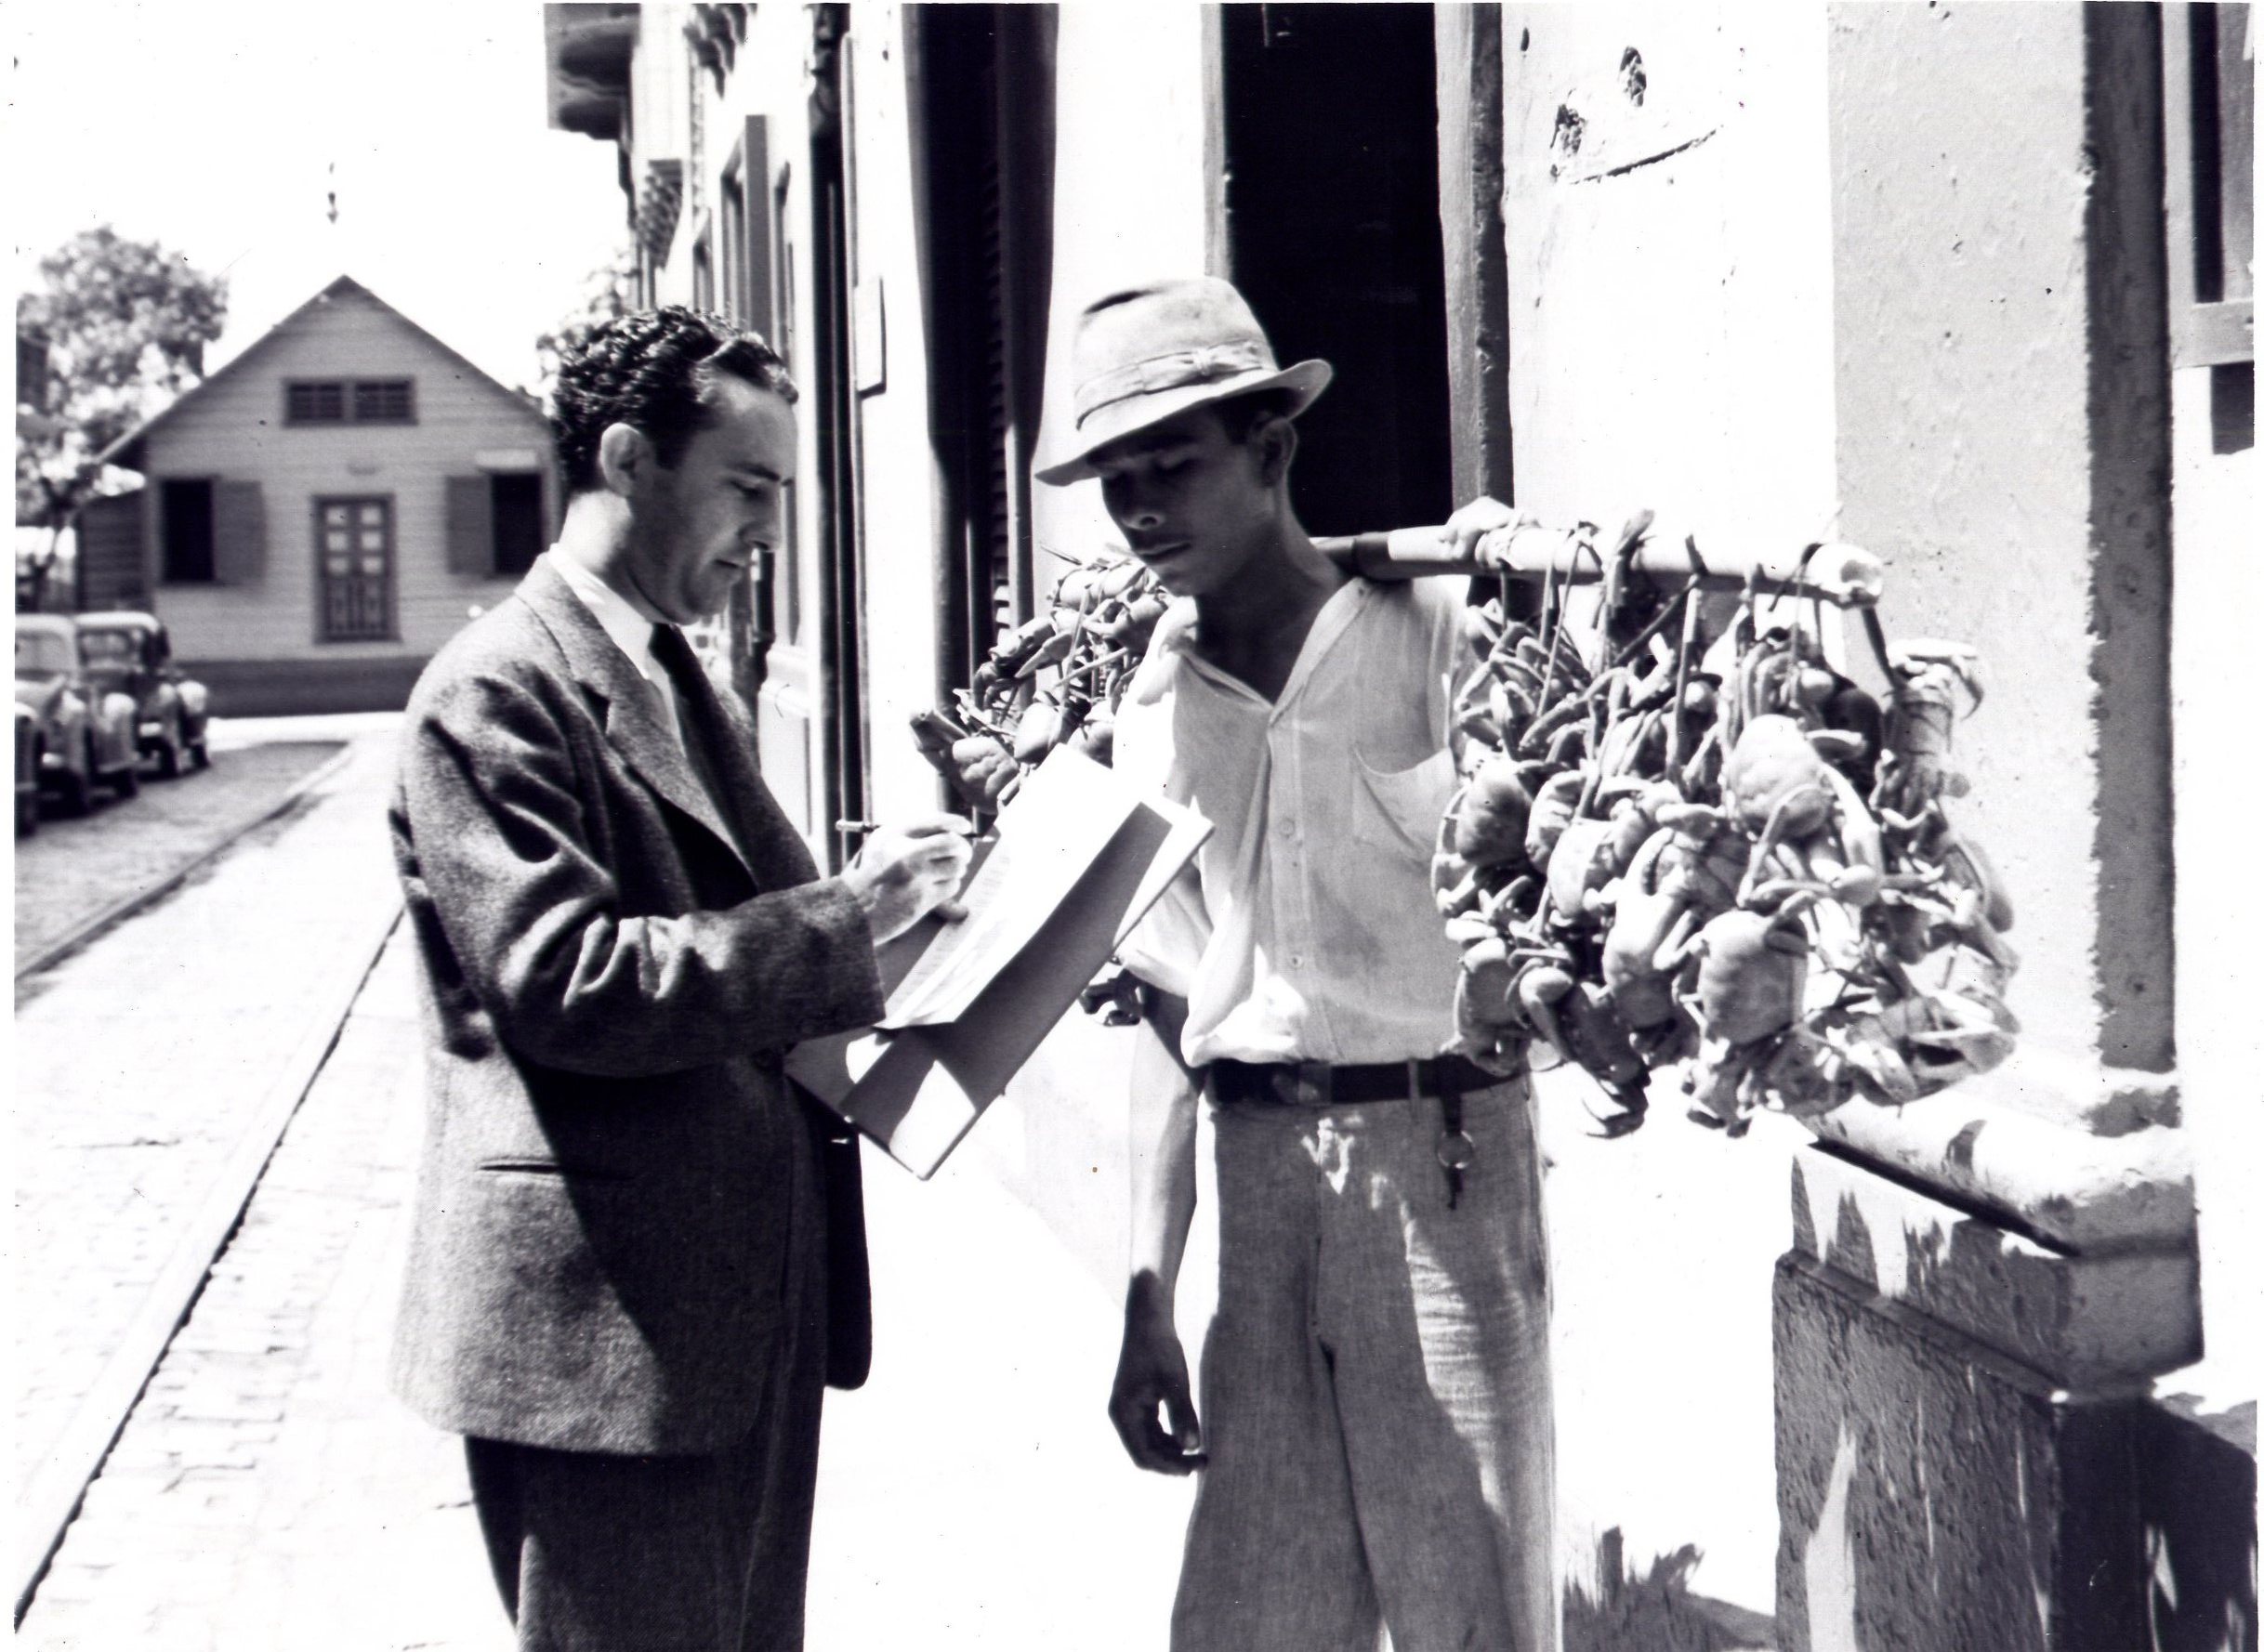 Census taker in Puerto Rico, 1940